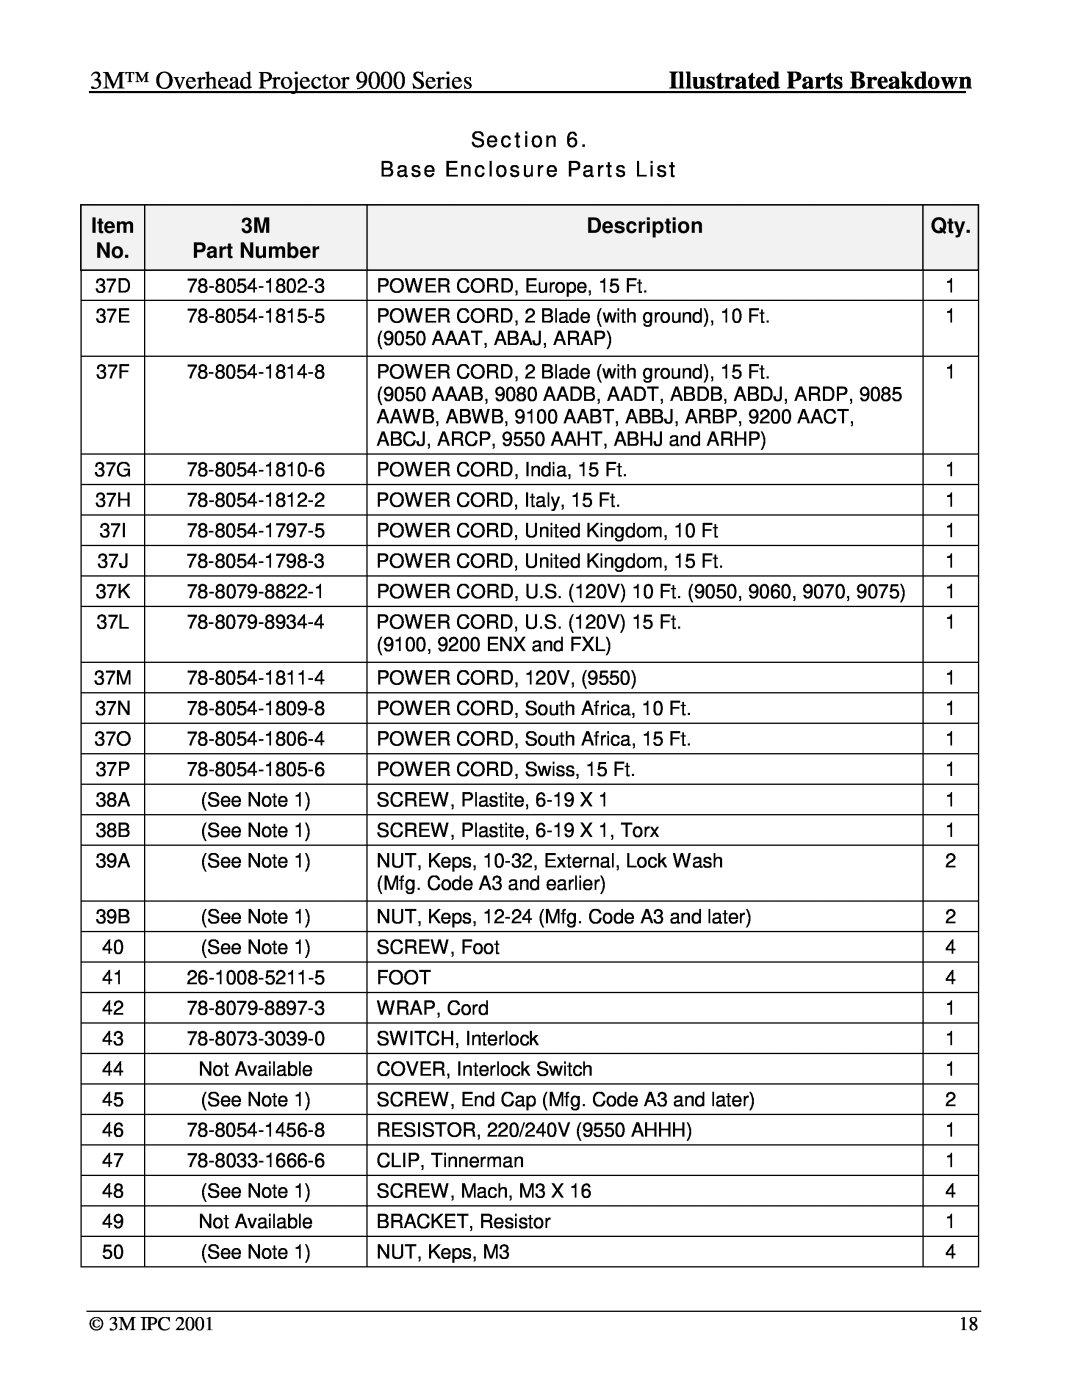 Xerox 9061 3M Overhead Projector 9000 Series, Illustrated Parts Breakdown, Section Base Enclosure Parts List, Description 